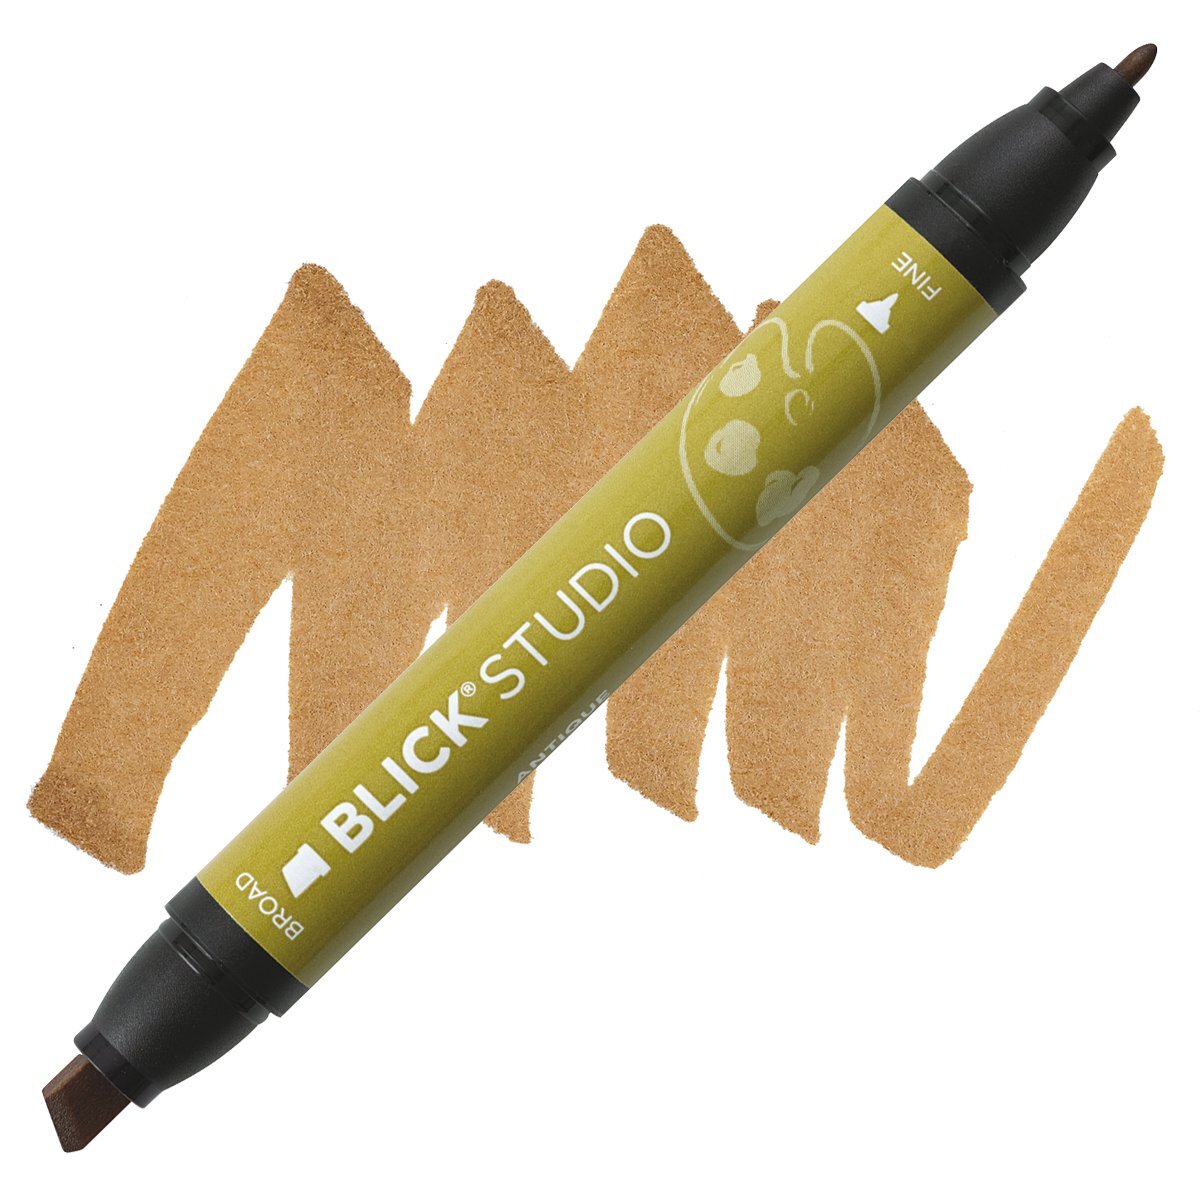 My JACKPOT Black Friday Blick Studio Brush Markers Mega Set Box Opening,  Testing, and Review 